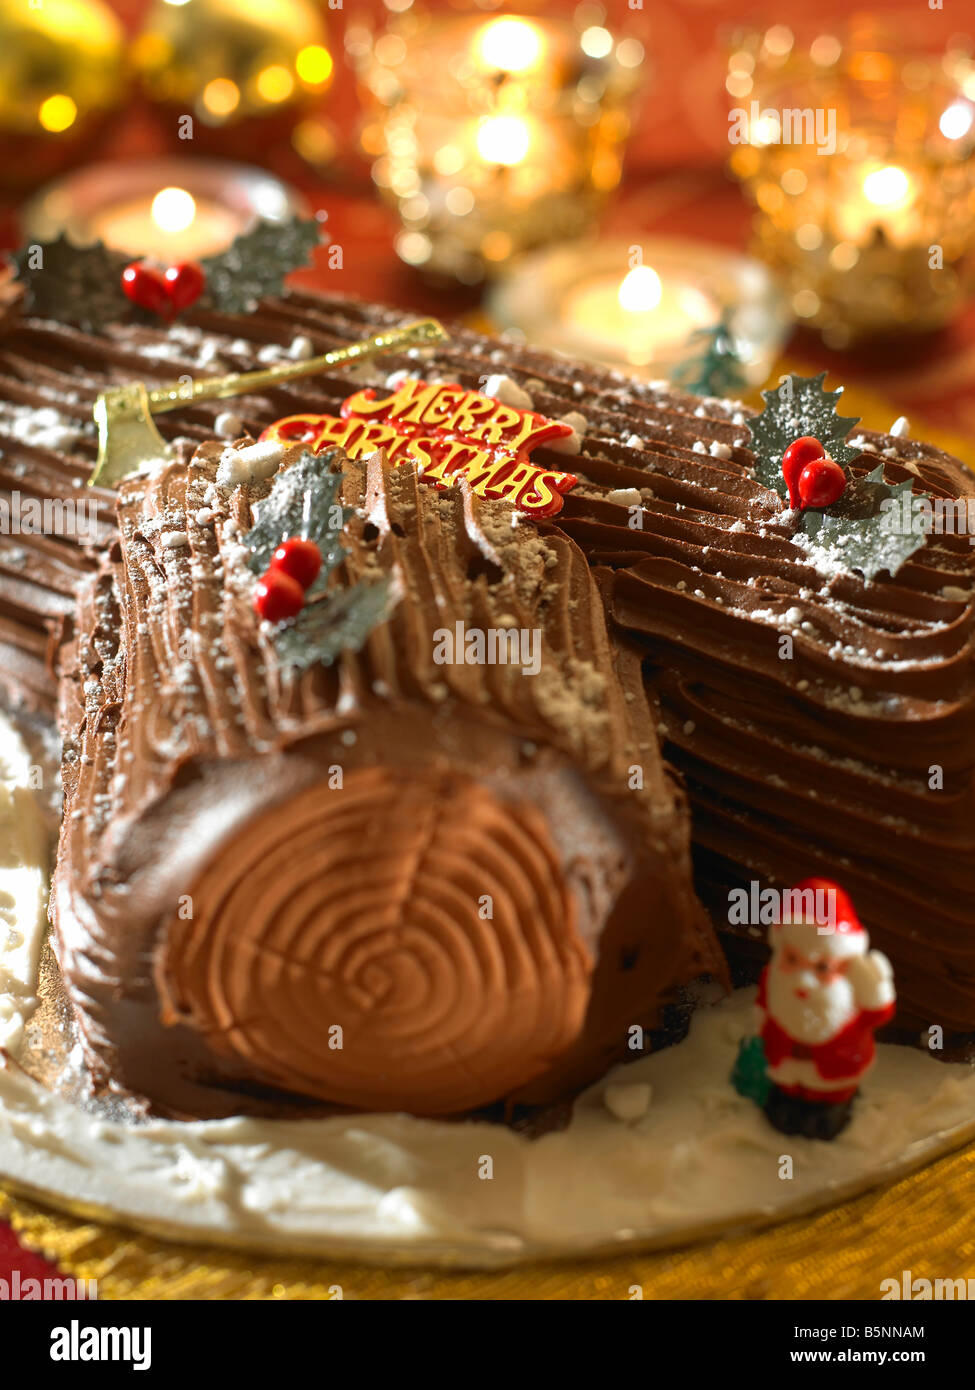 traditional Christmas Yule log cake Stock Photo - Alamy